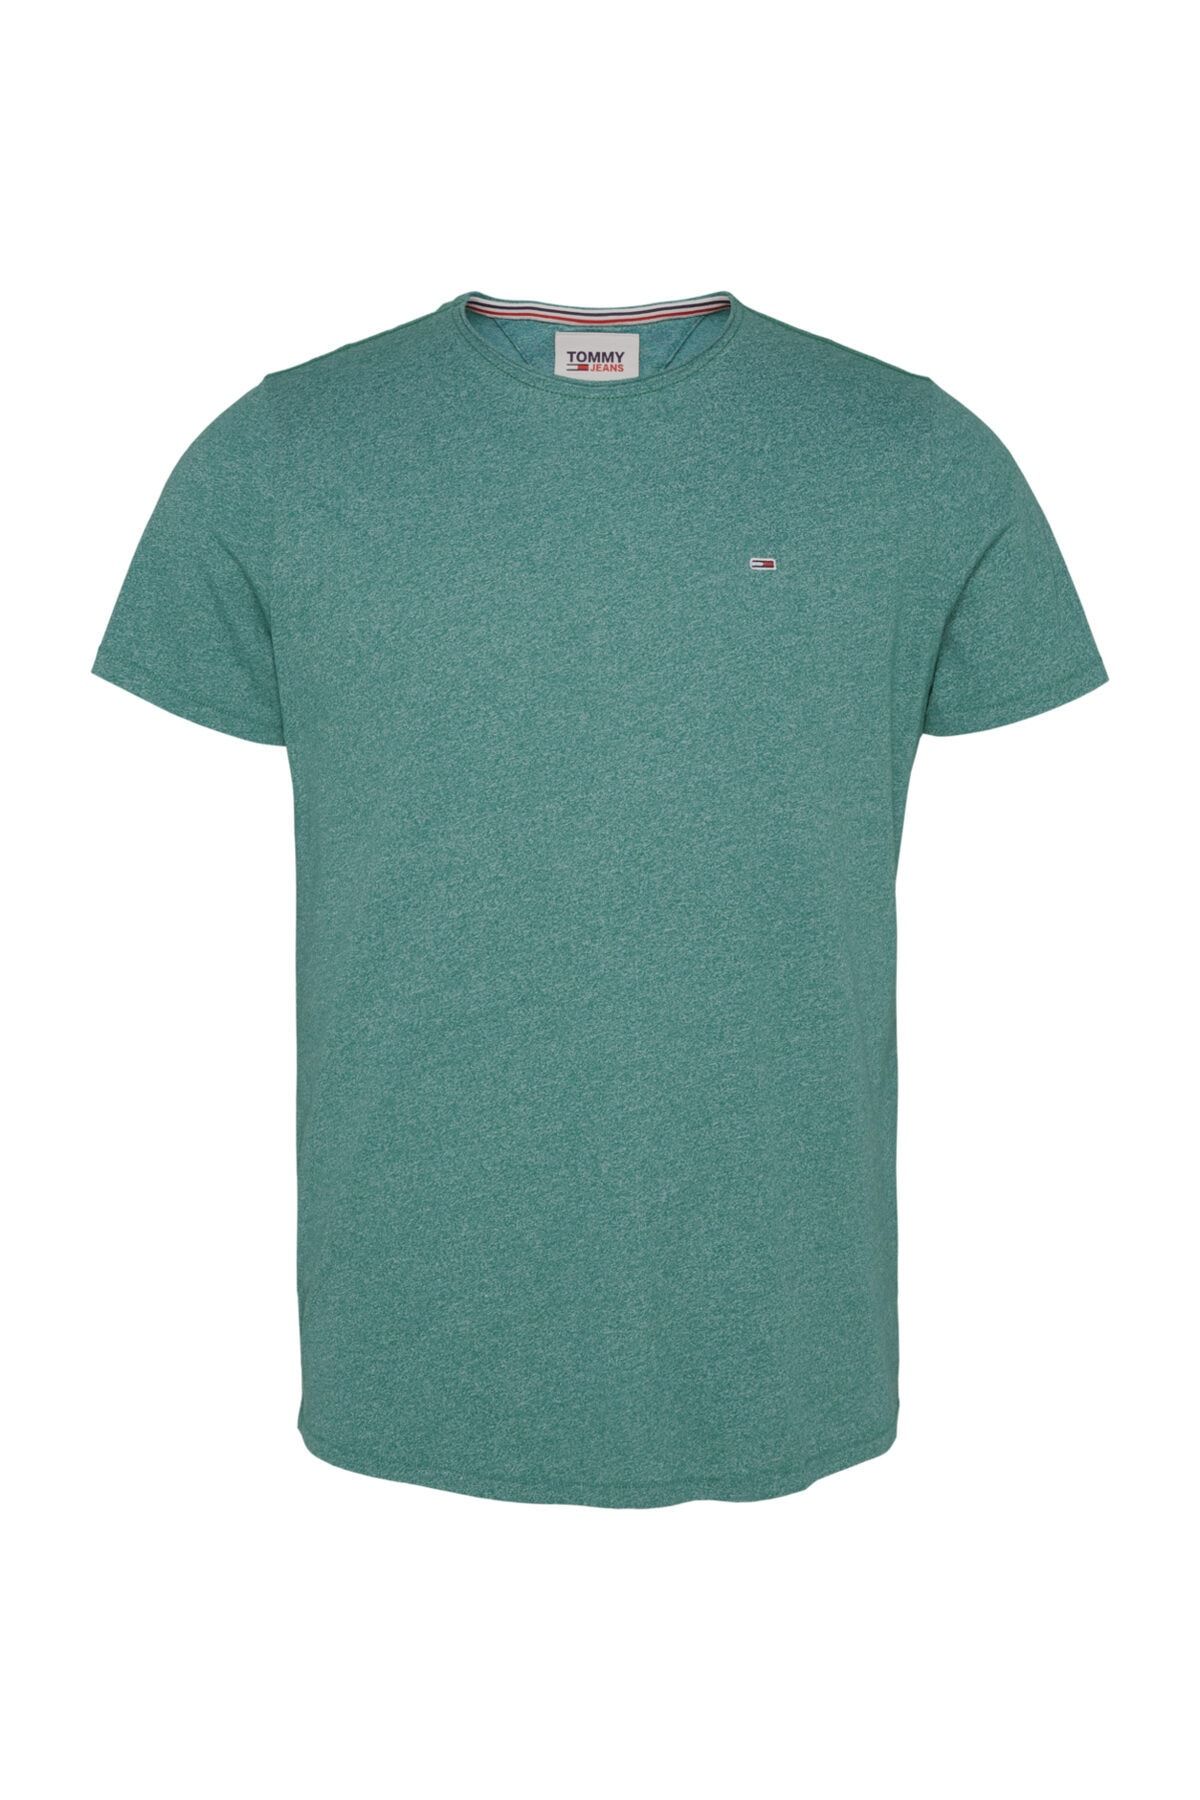 Tommy Hilfiger Erkek Yeşil T-Shirt Tjm Essential Jaspe Tee DM0DM08736